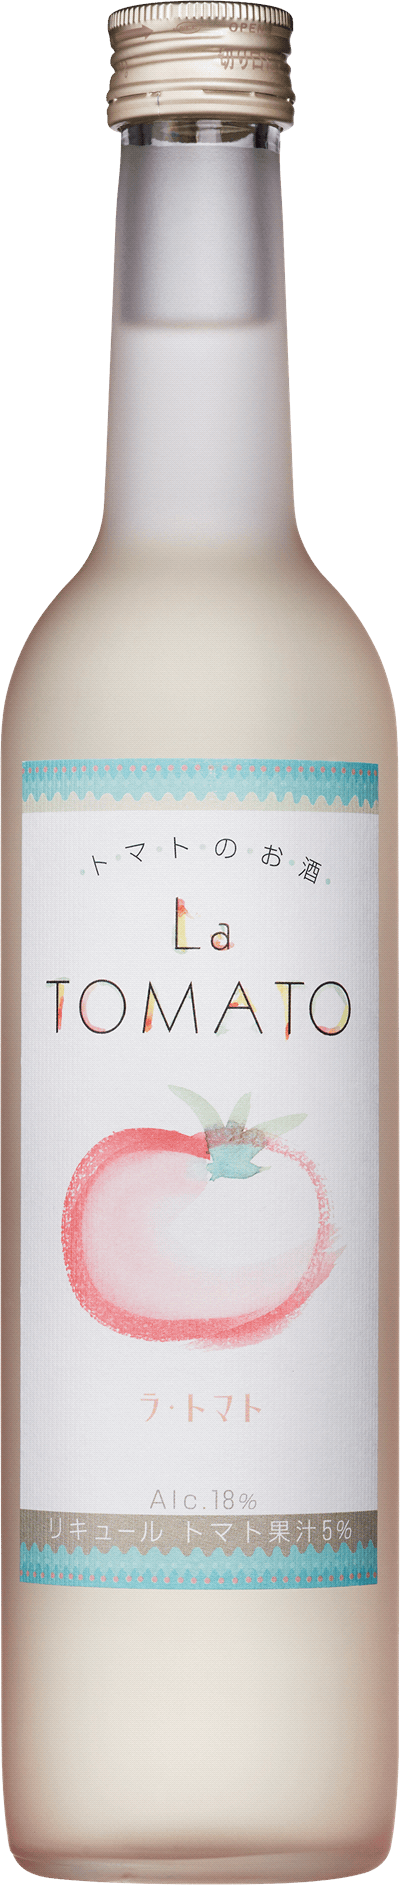 Produktbild för La Tomato